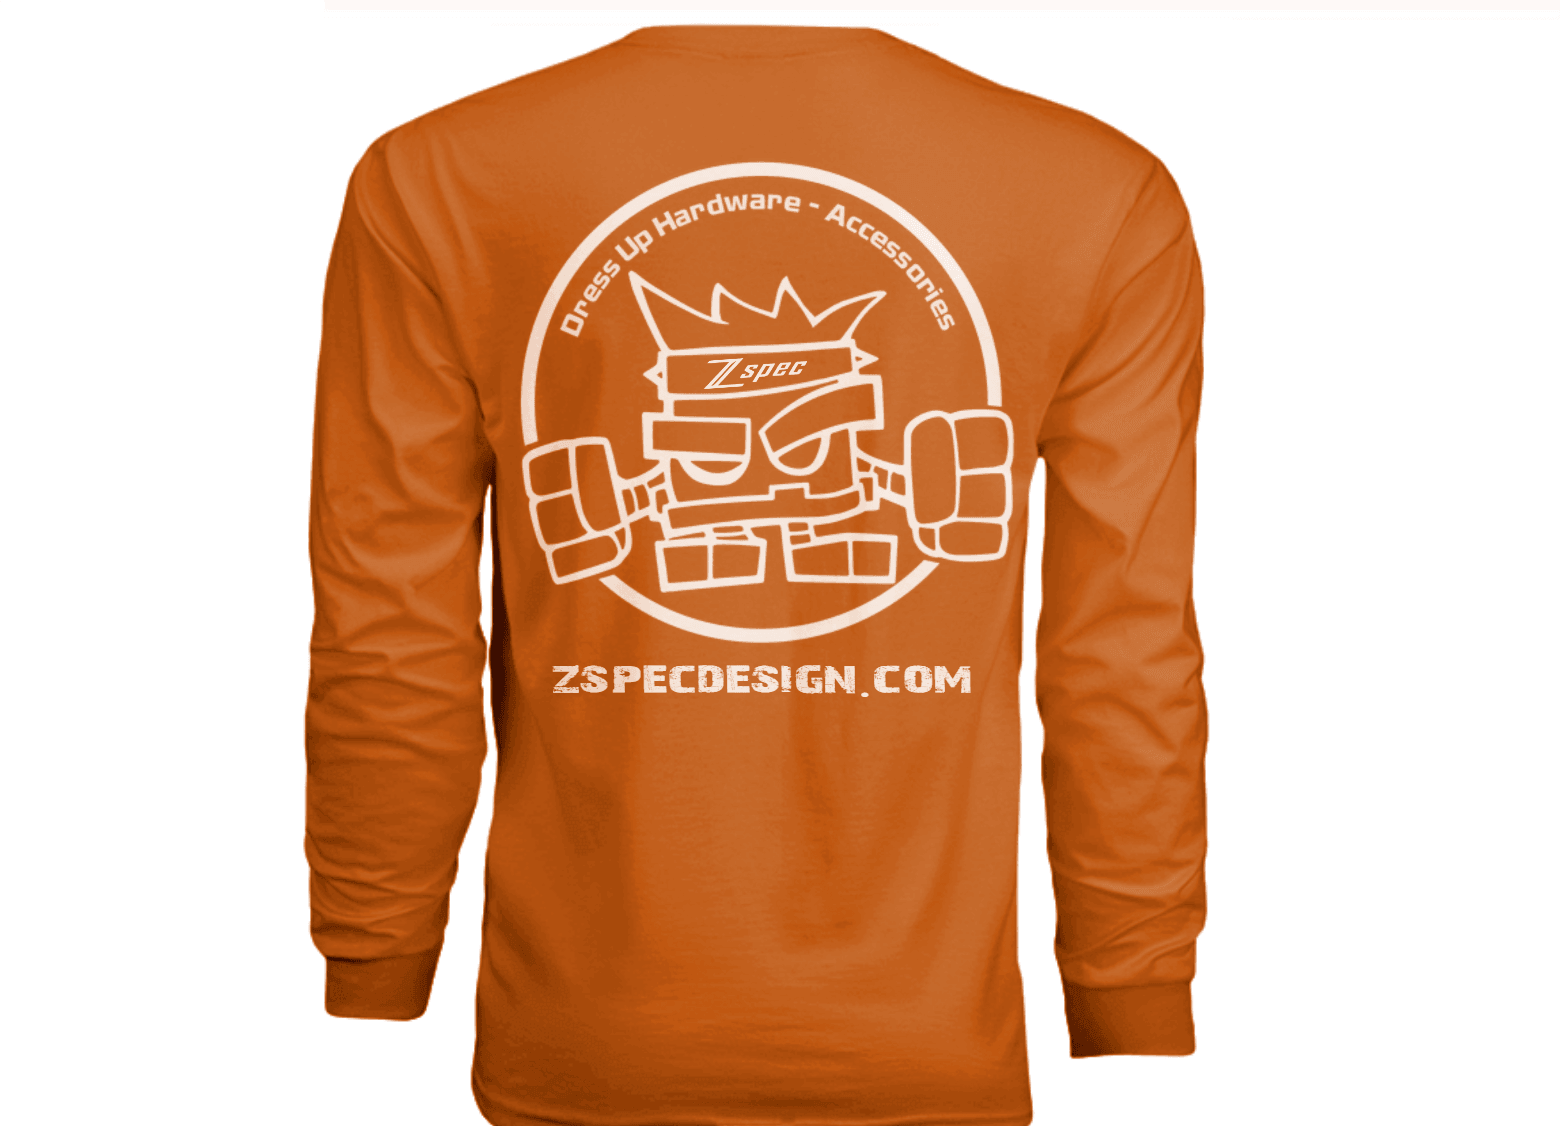 ZSPEC Long-Sleeve T-Shirt, Burnt Orange or Light Blue - M/L/XL/XXL Apparel Sweatshirt Cotton Hanes Gildan Racing Auto Car Enthusiast Cool Dress-Up 